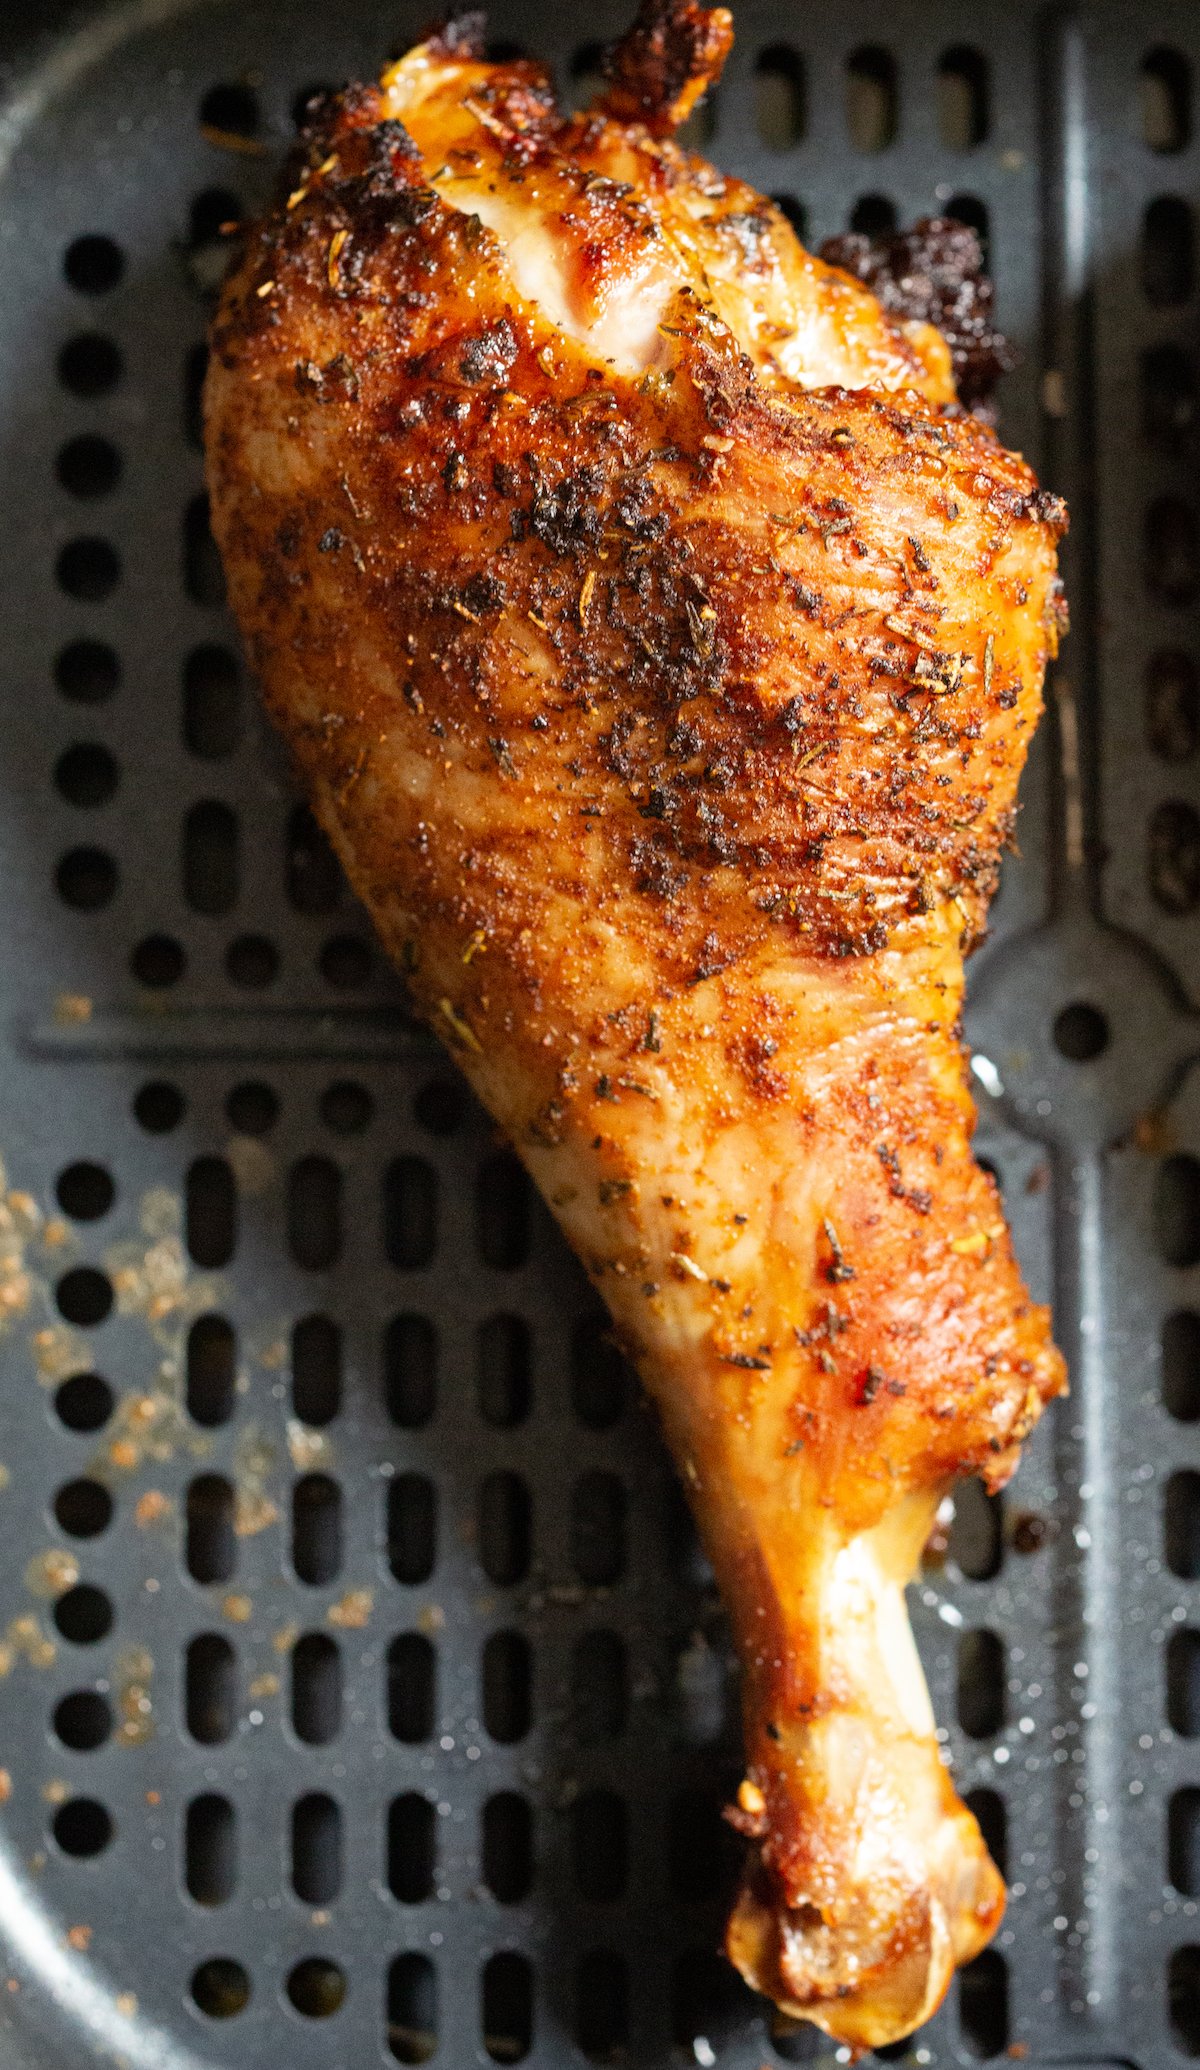 A single cooked turkey leg in an air fryer basket.